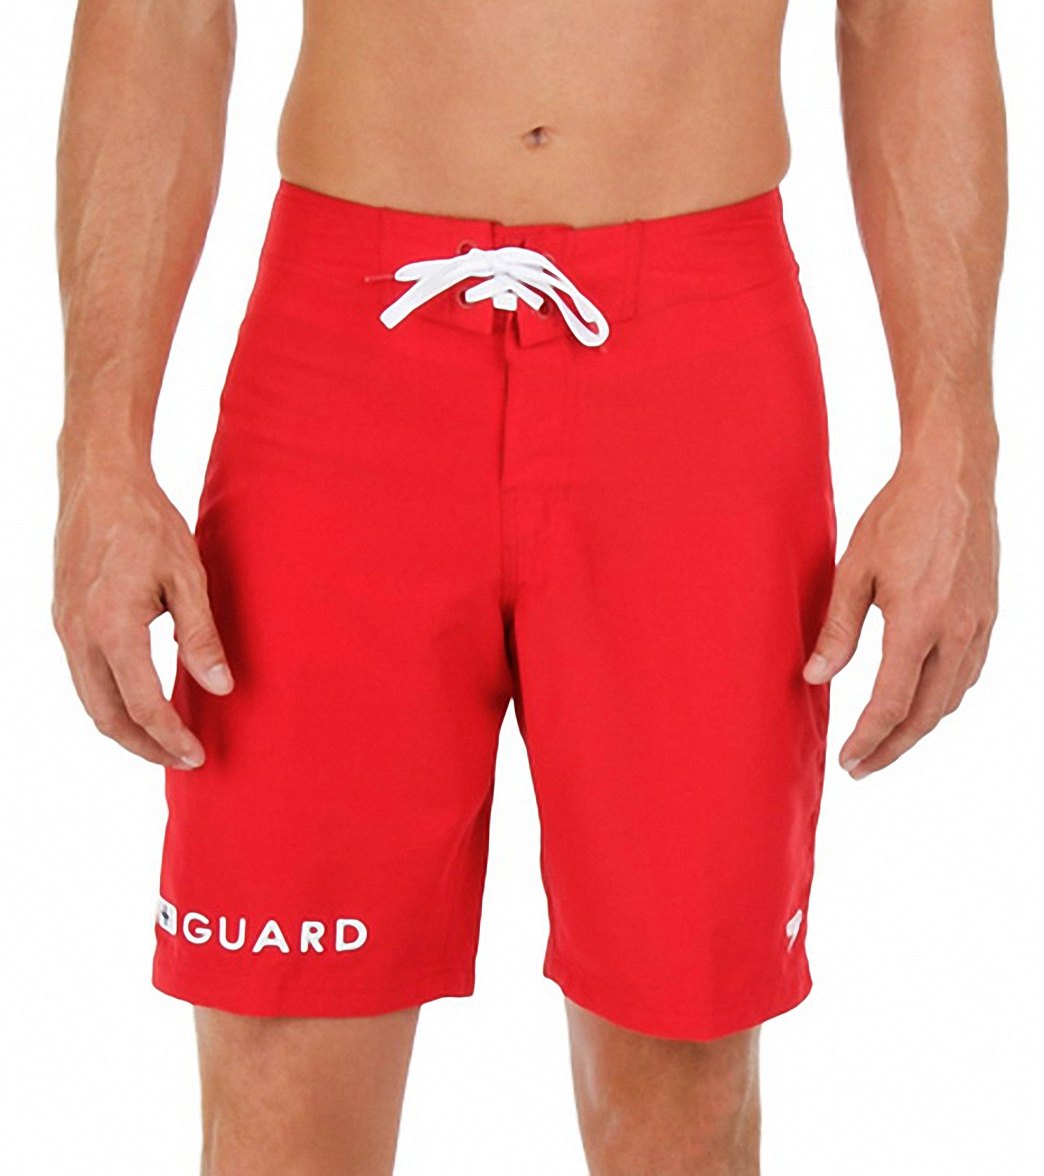 lifeguard speedo